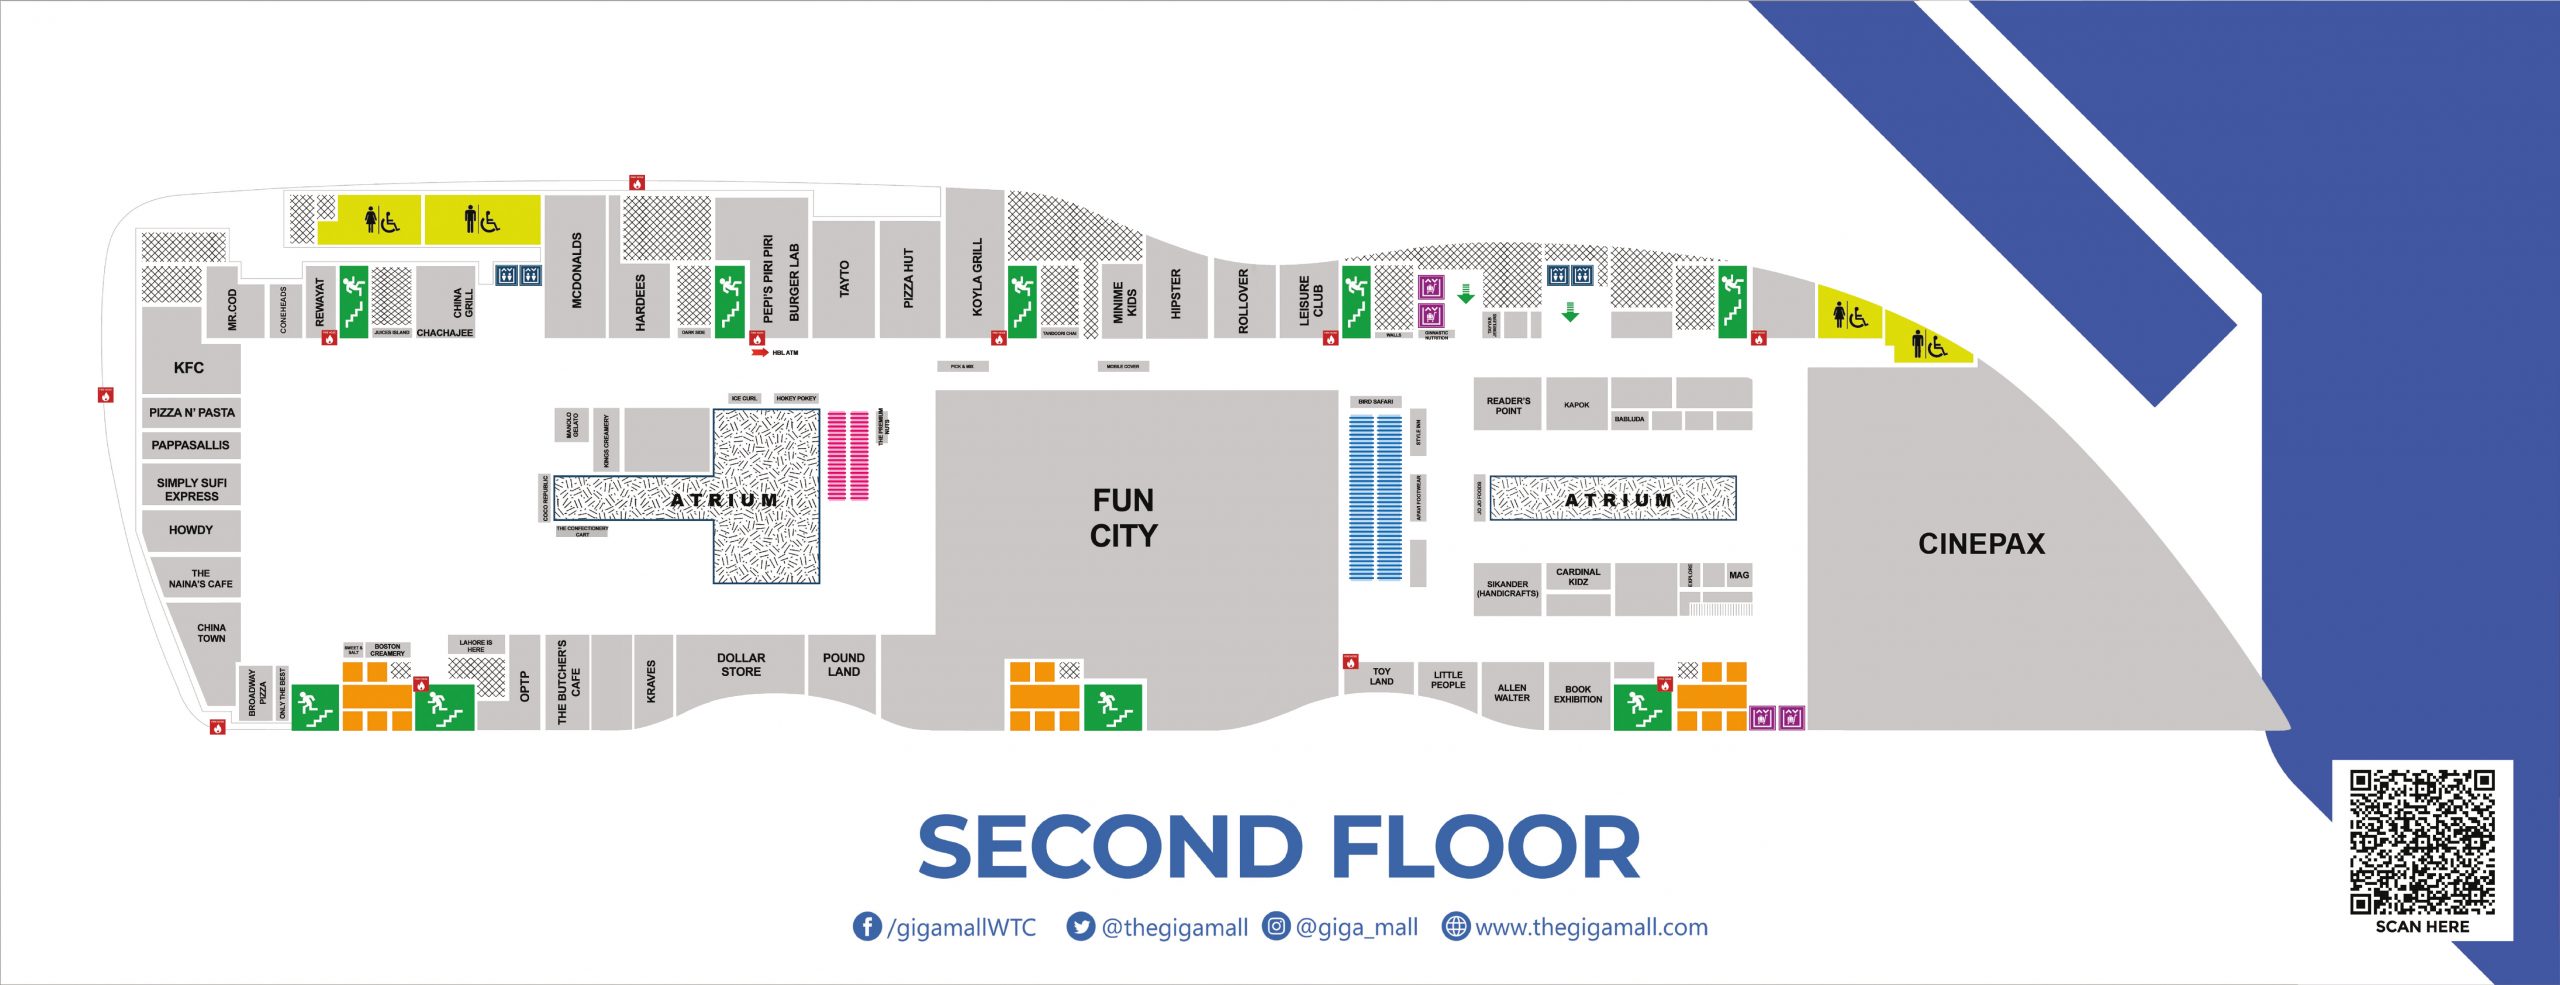 Entertainment Floor Plan in Mall